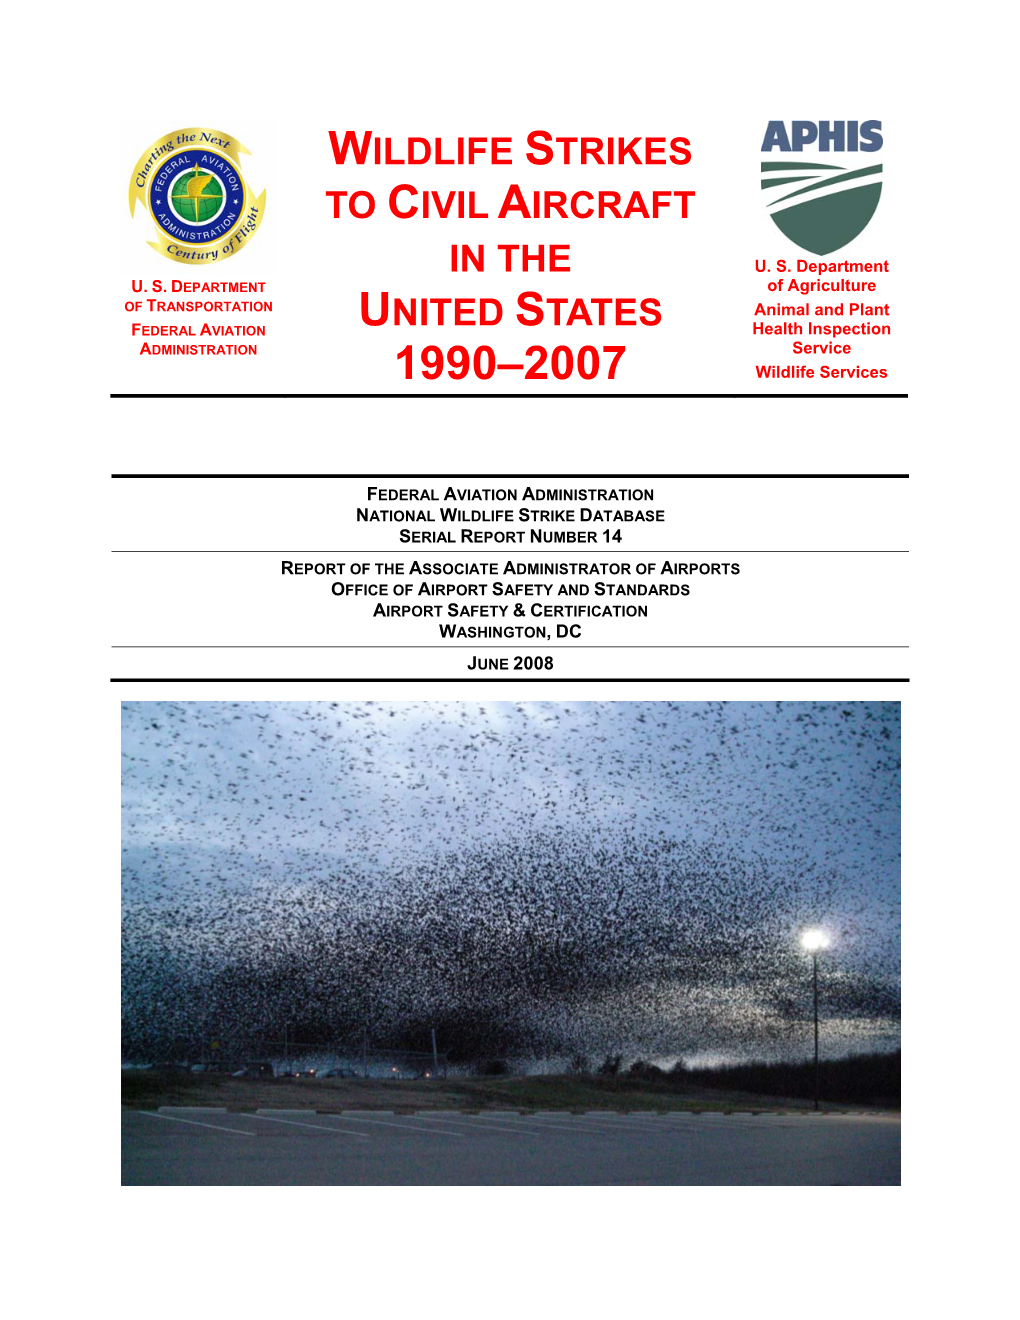 Wildlife Strikes to Civil Aircraft in USA, 1990-2007